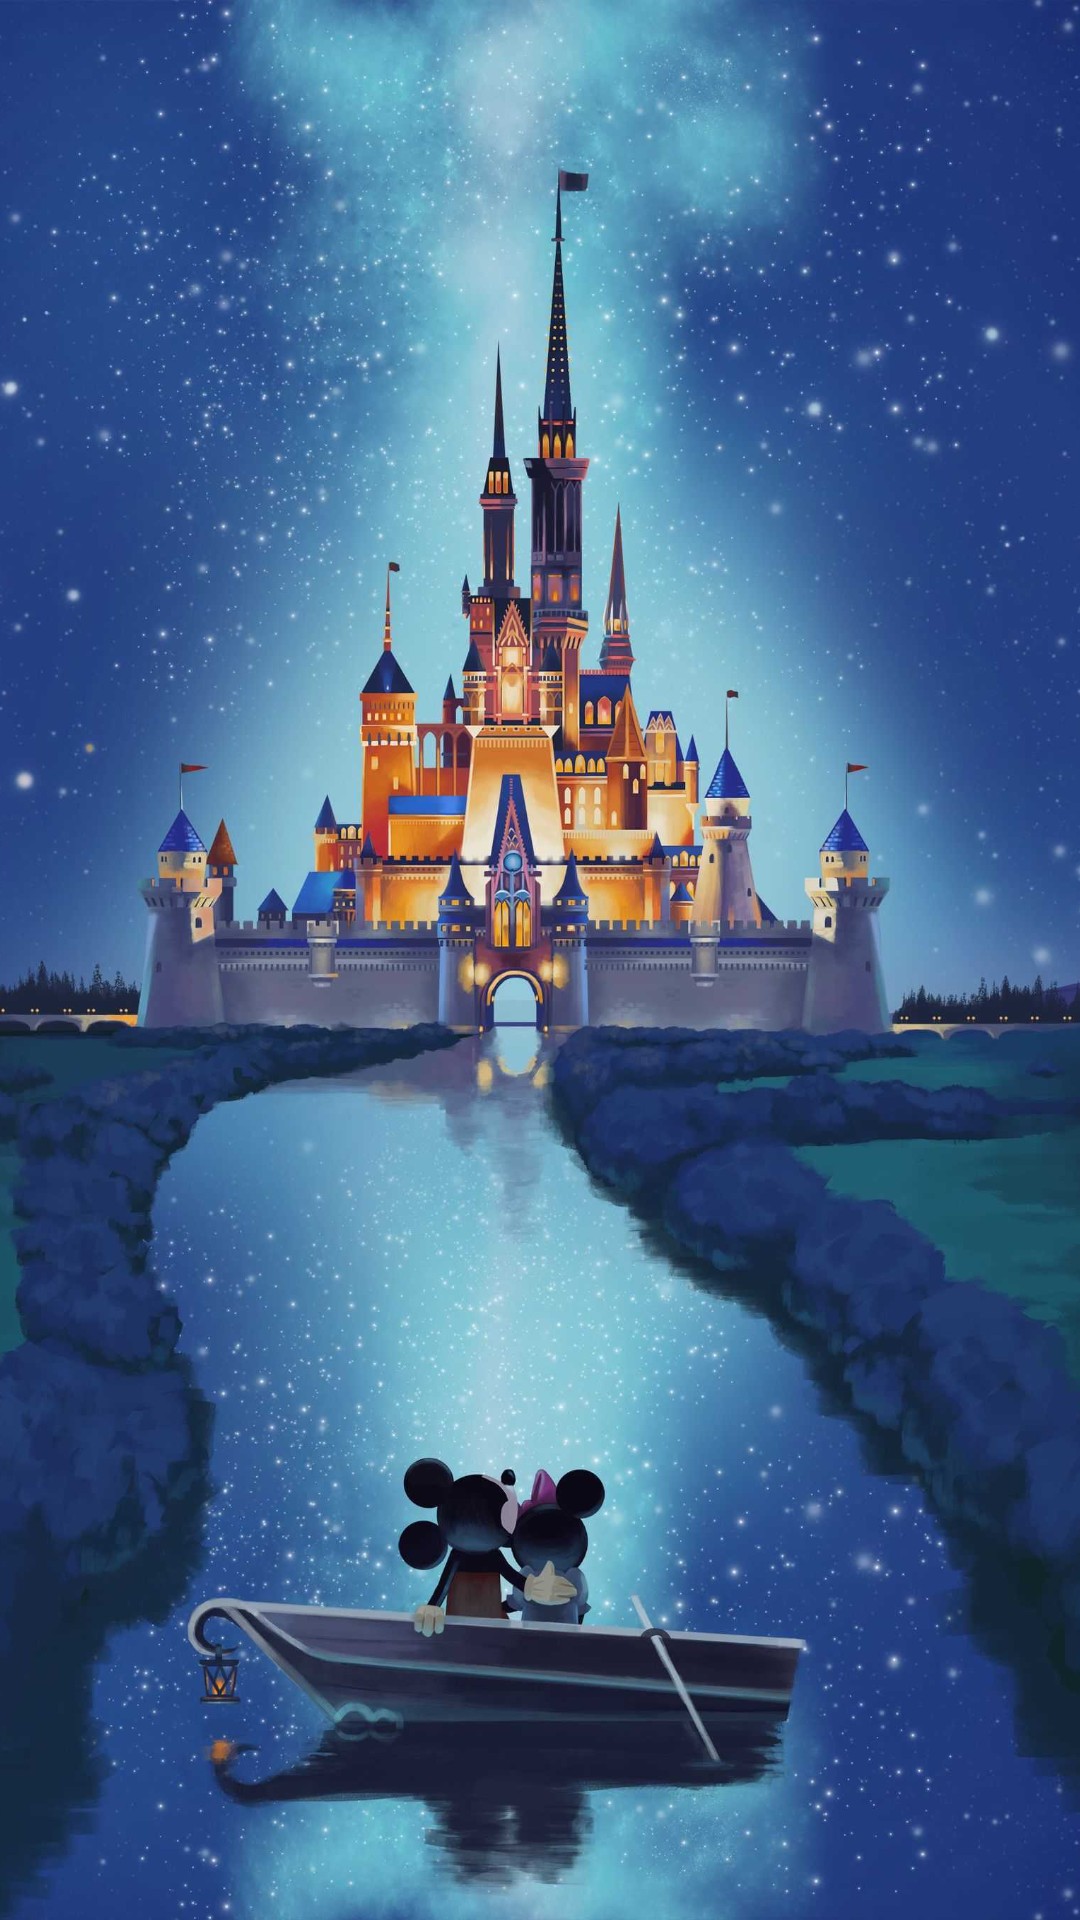 Aesthetic wallpapers ~ - Disney princesses